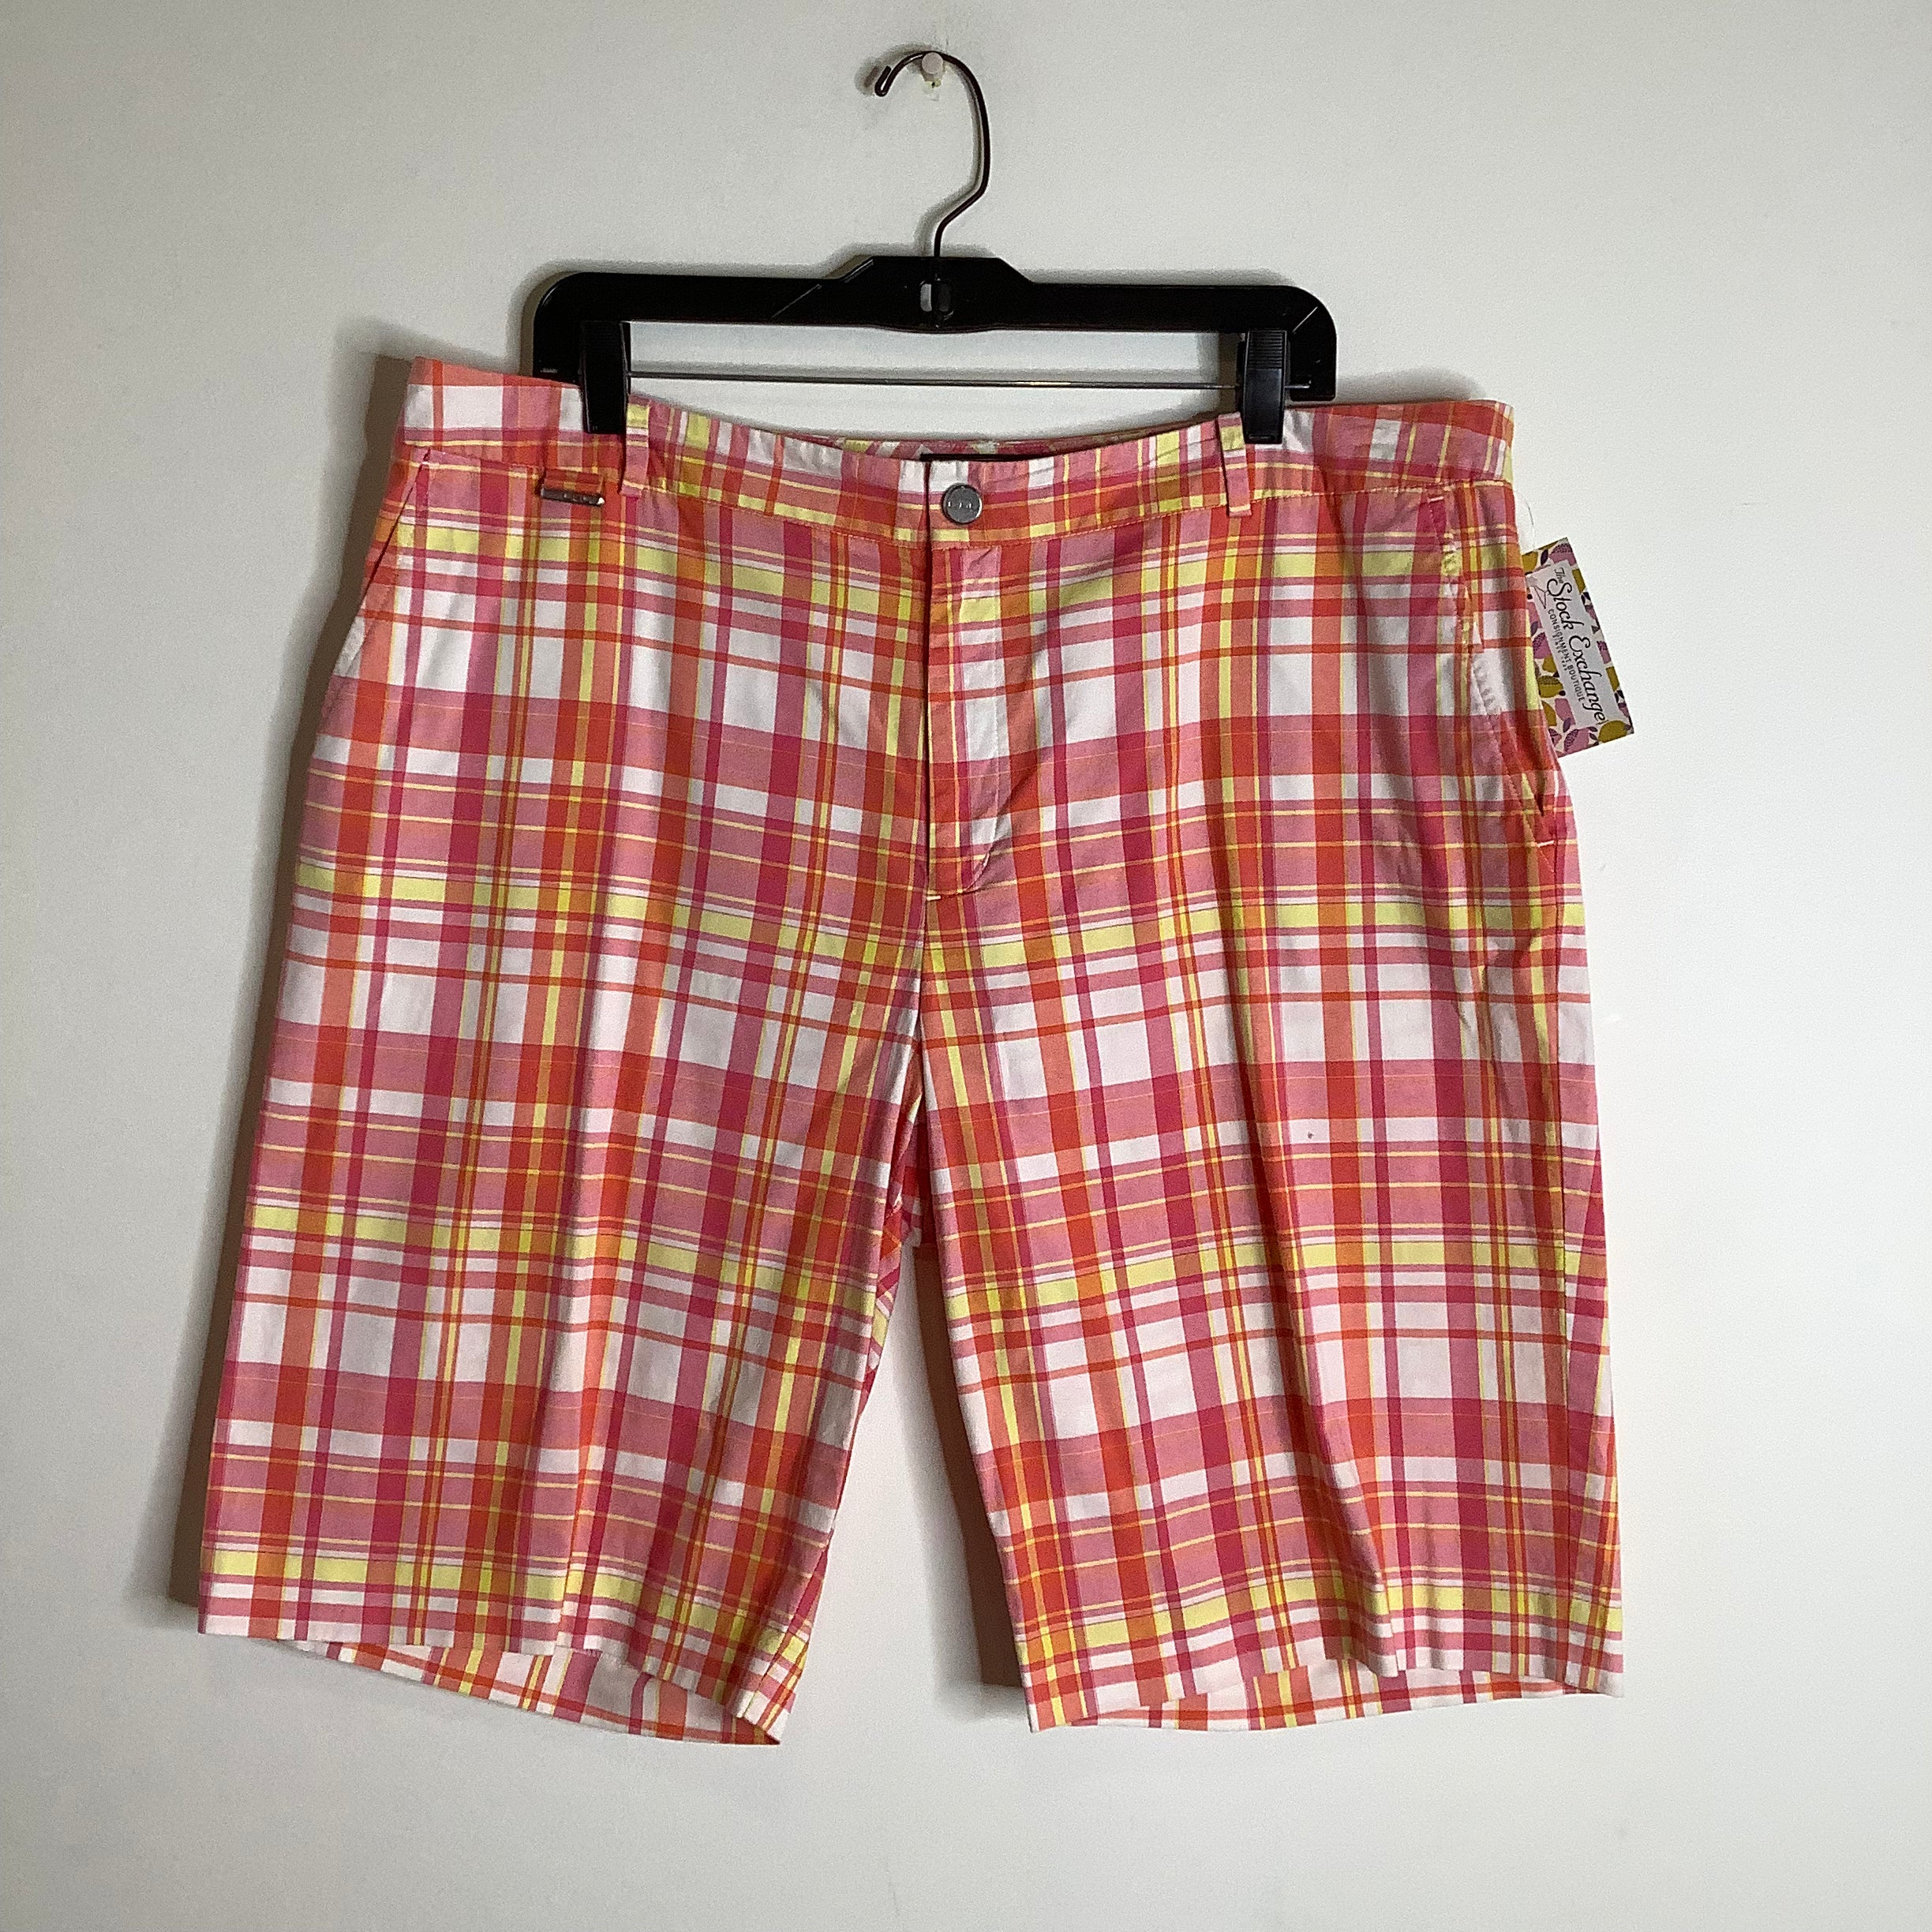 Ralph Lauren Orange Shorts Size 16